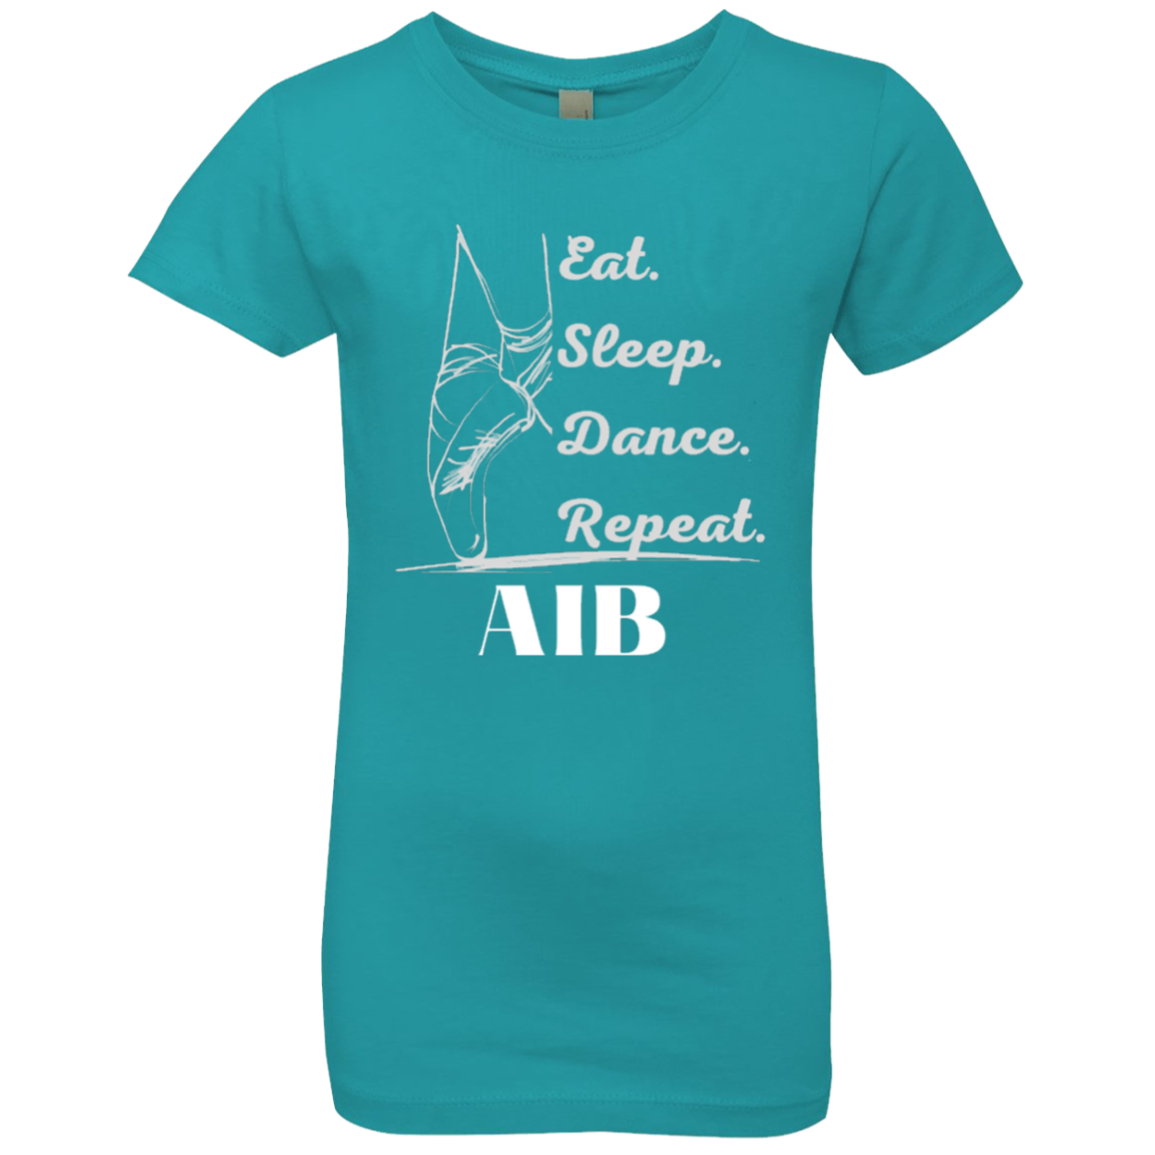 Eat. Sleep. Dance. Repeat. AIB. Girls' FittedT-Shirt